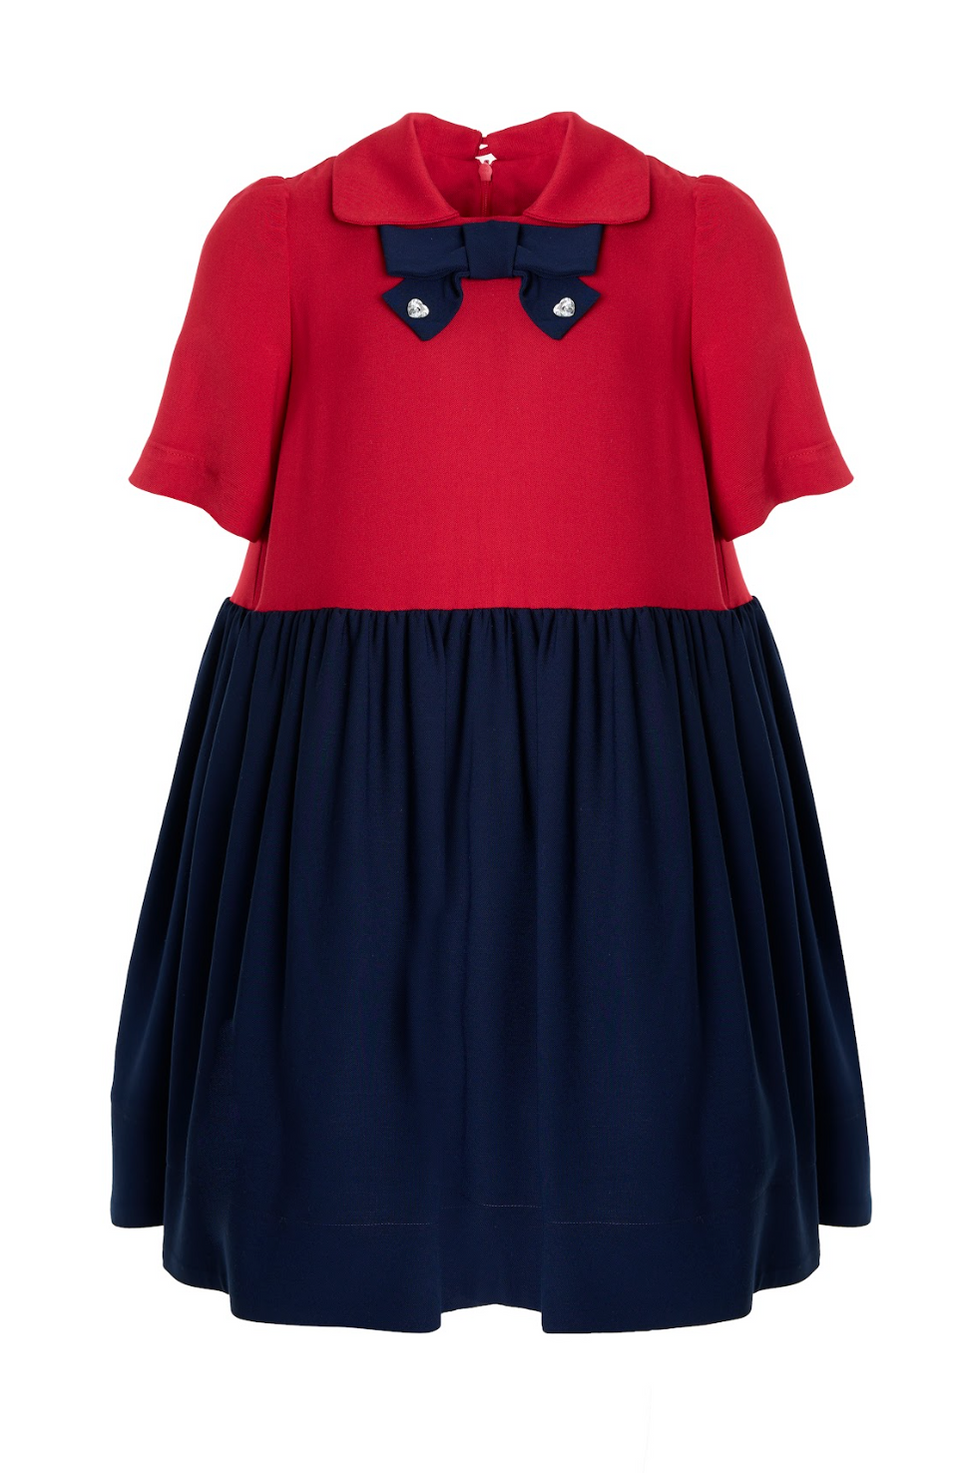 Mimisol Red & Navy Twill Bow Dress